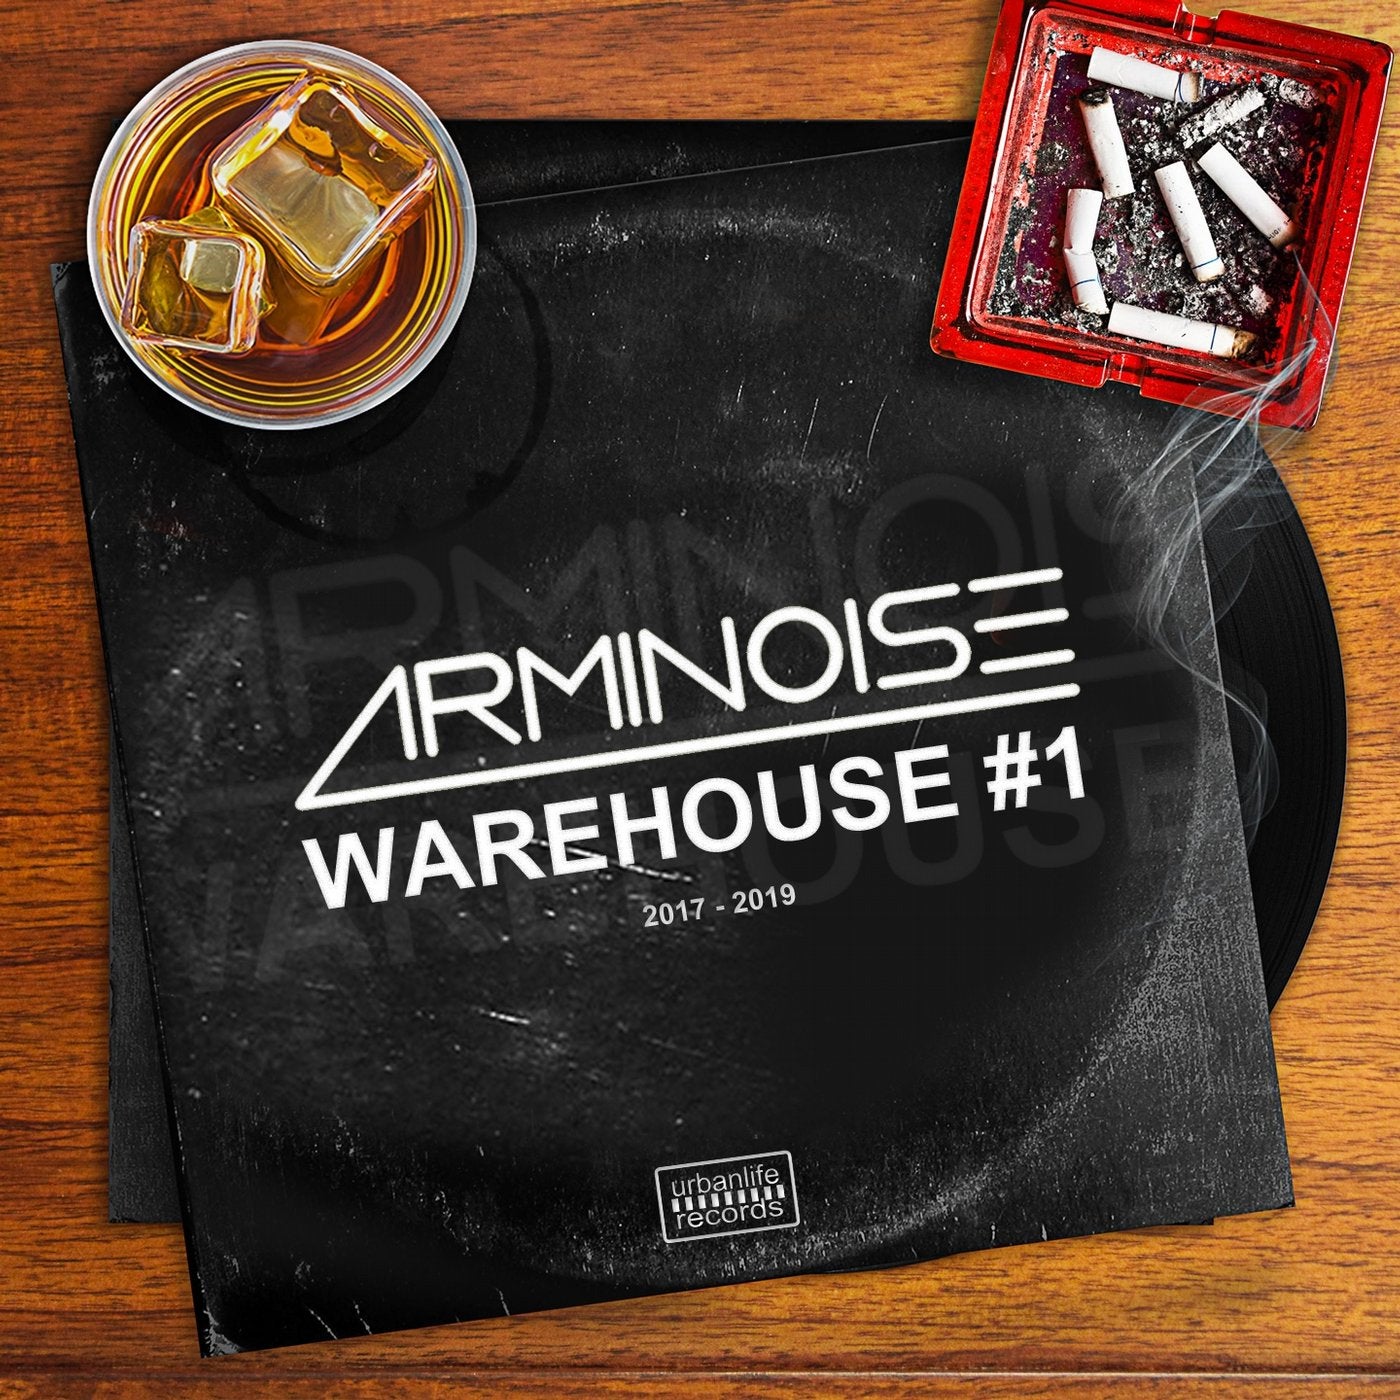 Arminoise Warehouse #1 (2017 - 2019)